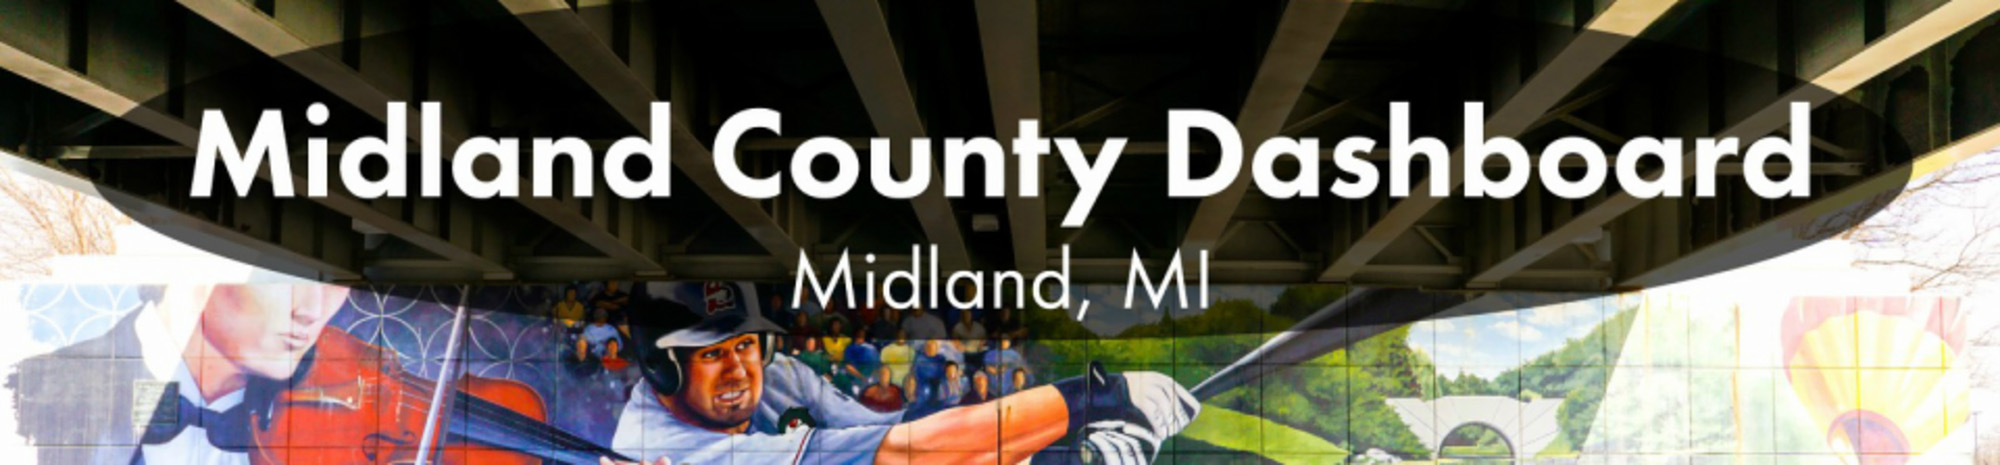 sample image of Midland mural